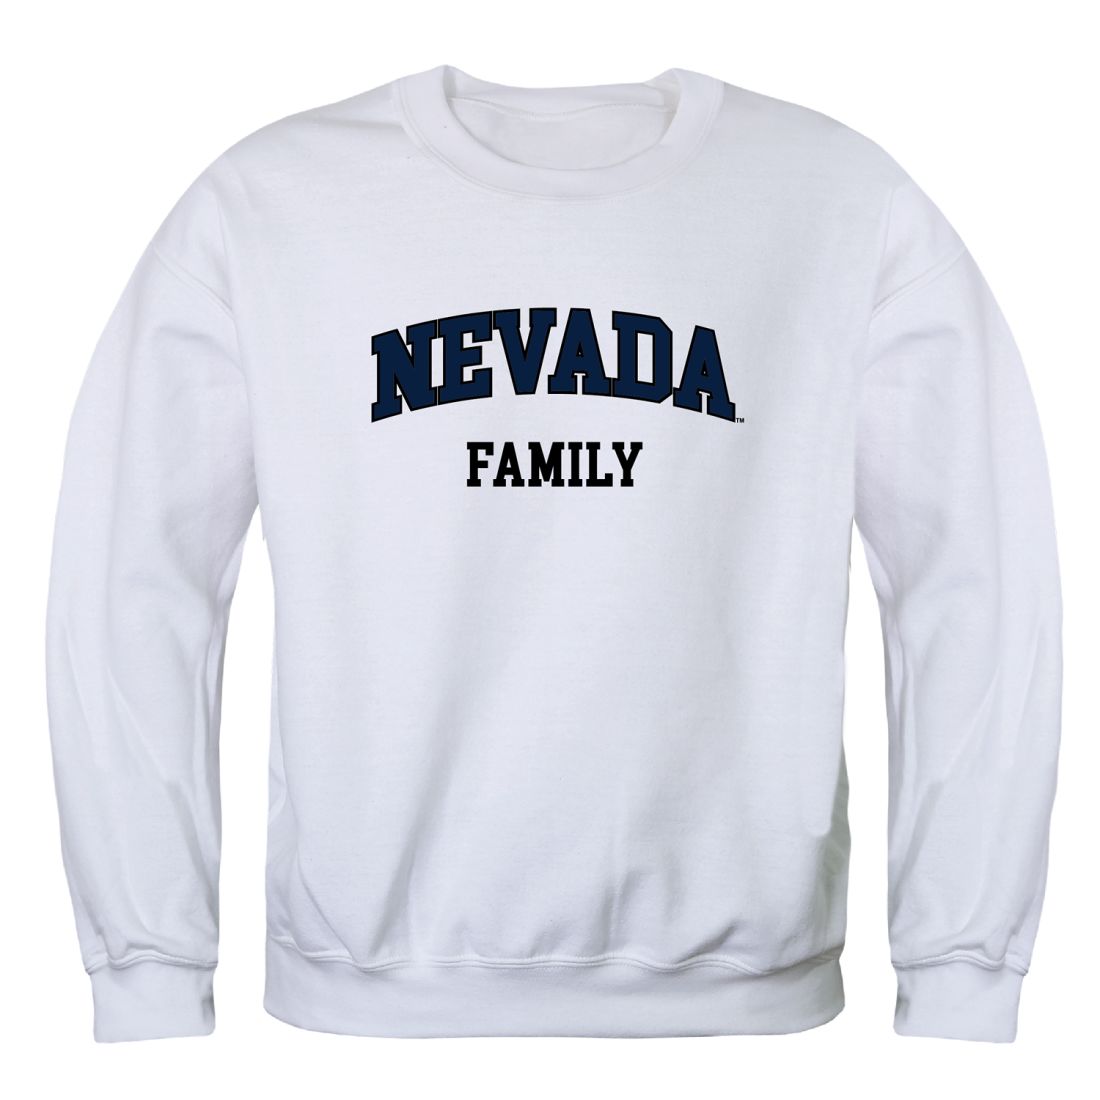 University-of-Nevada-Wolf-Pack-Family-Fleece-Crewneck-Pullover-Sweatshirt